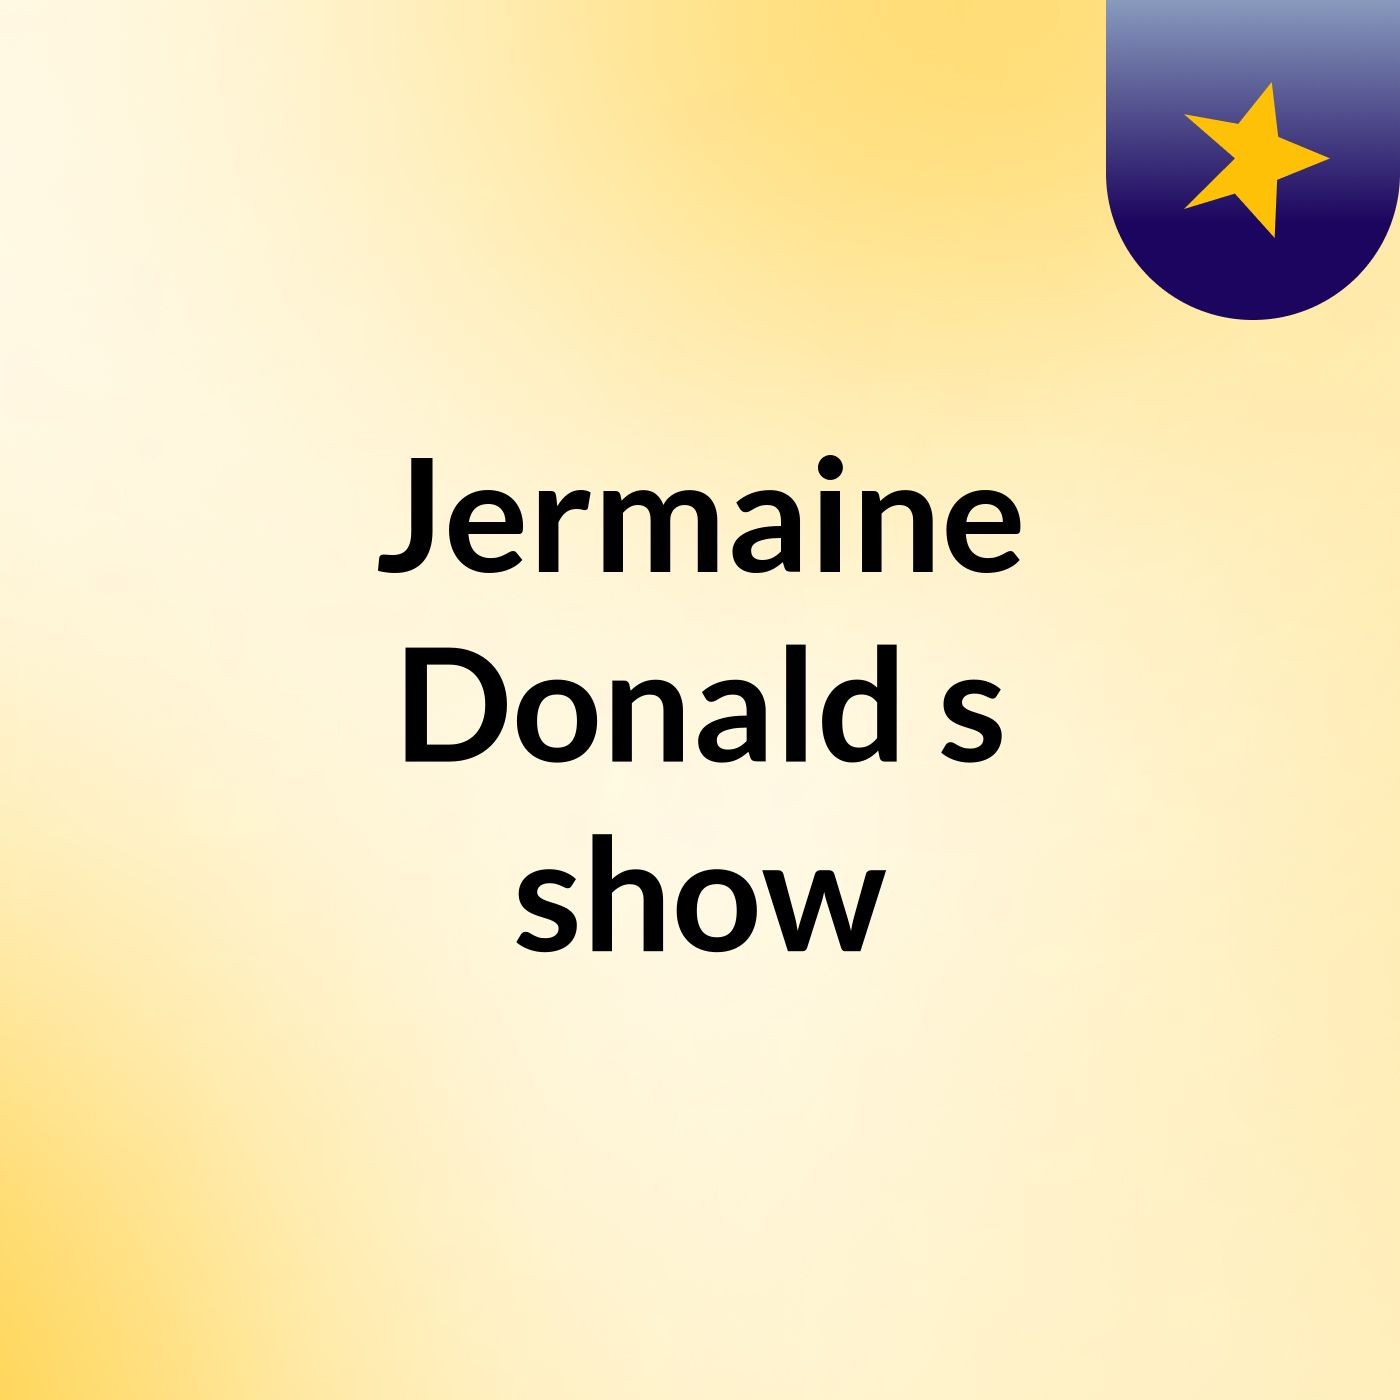 Episode 5 - Jermaine Donald's show